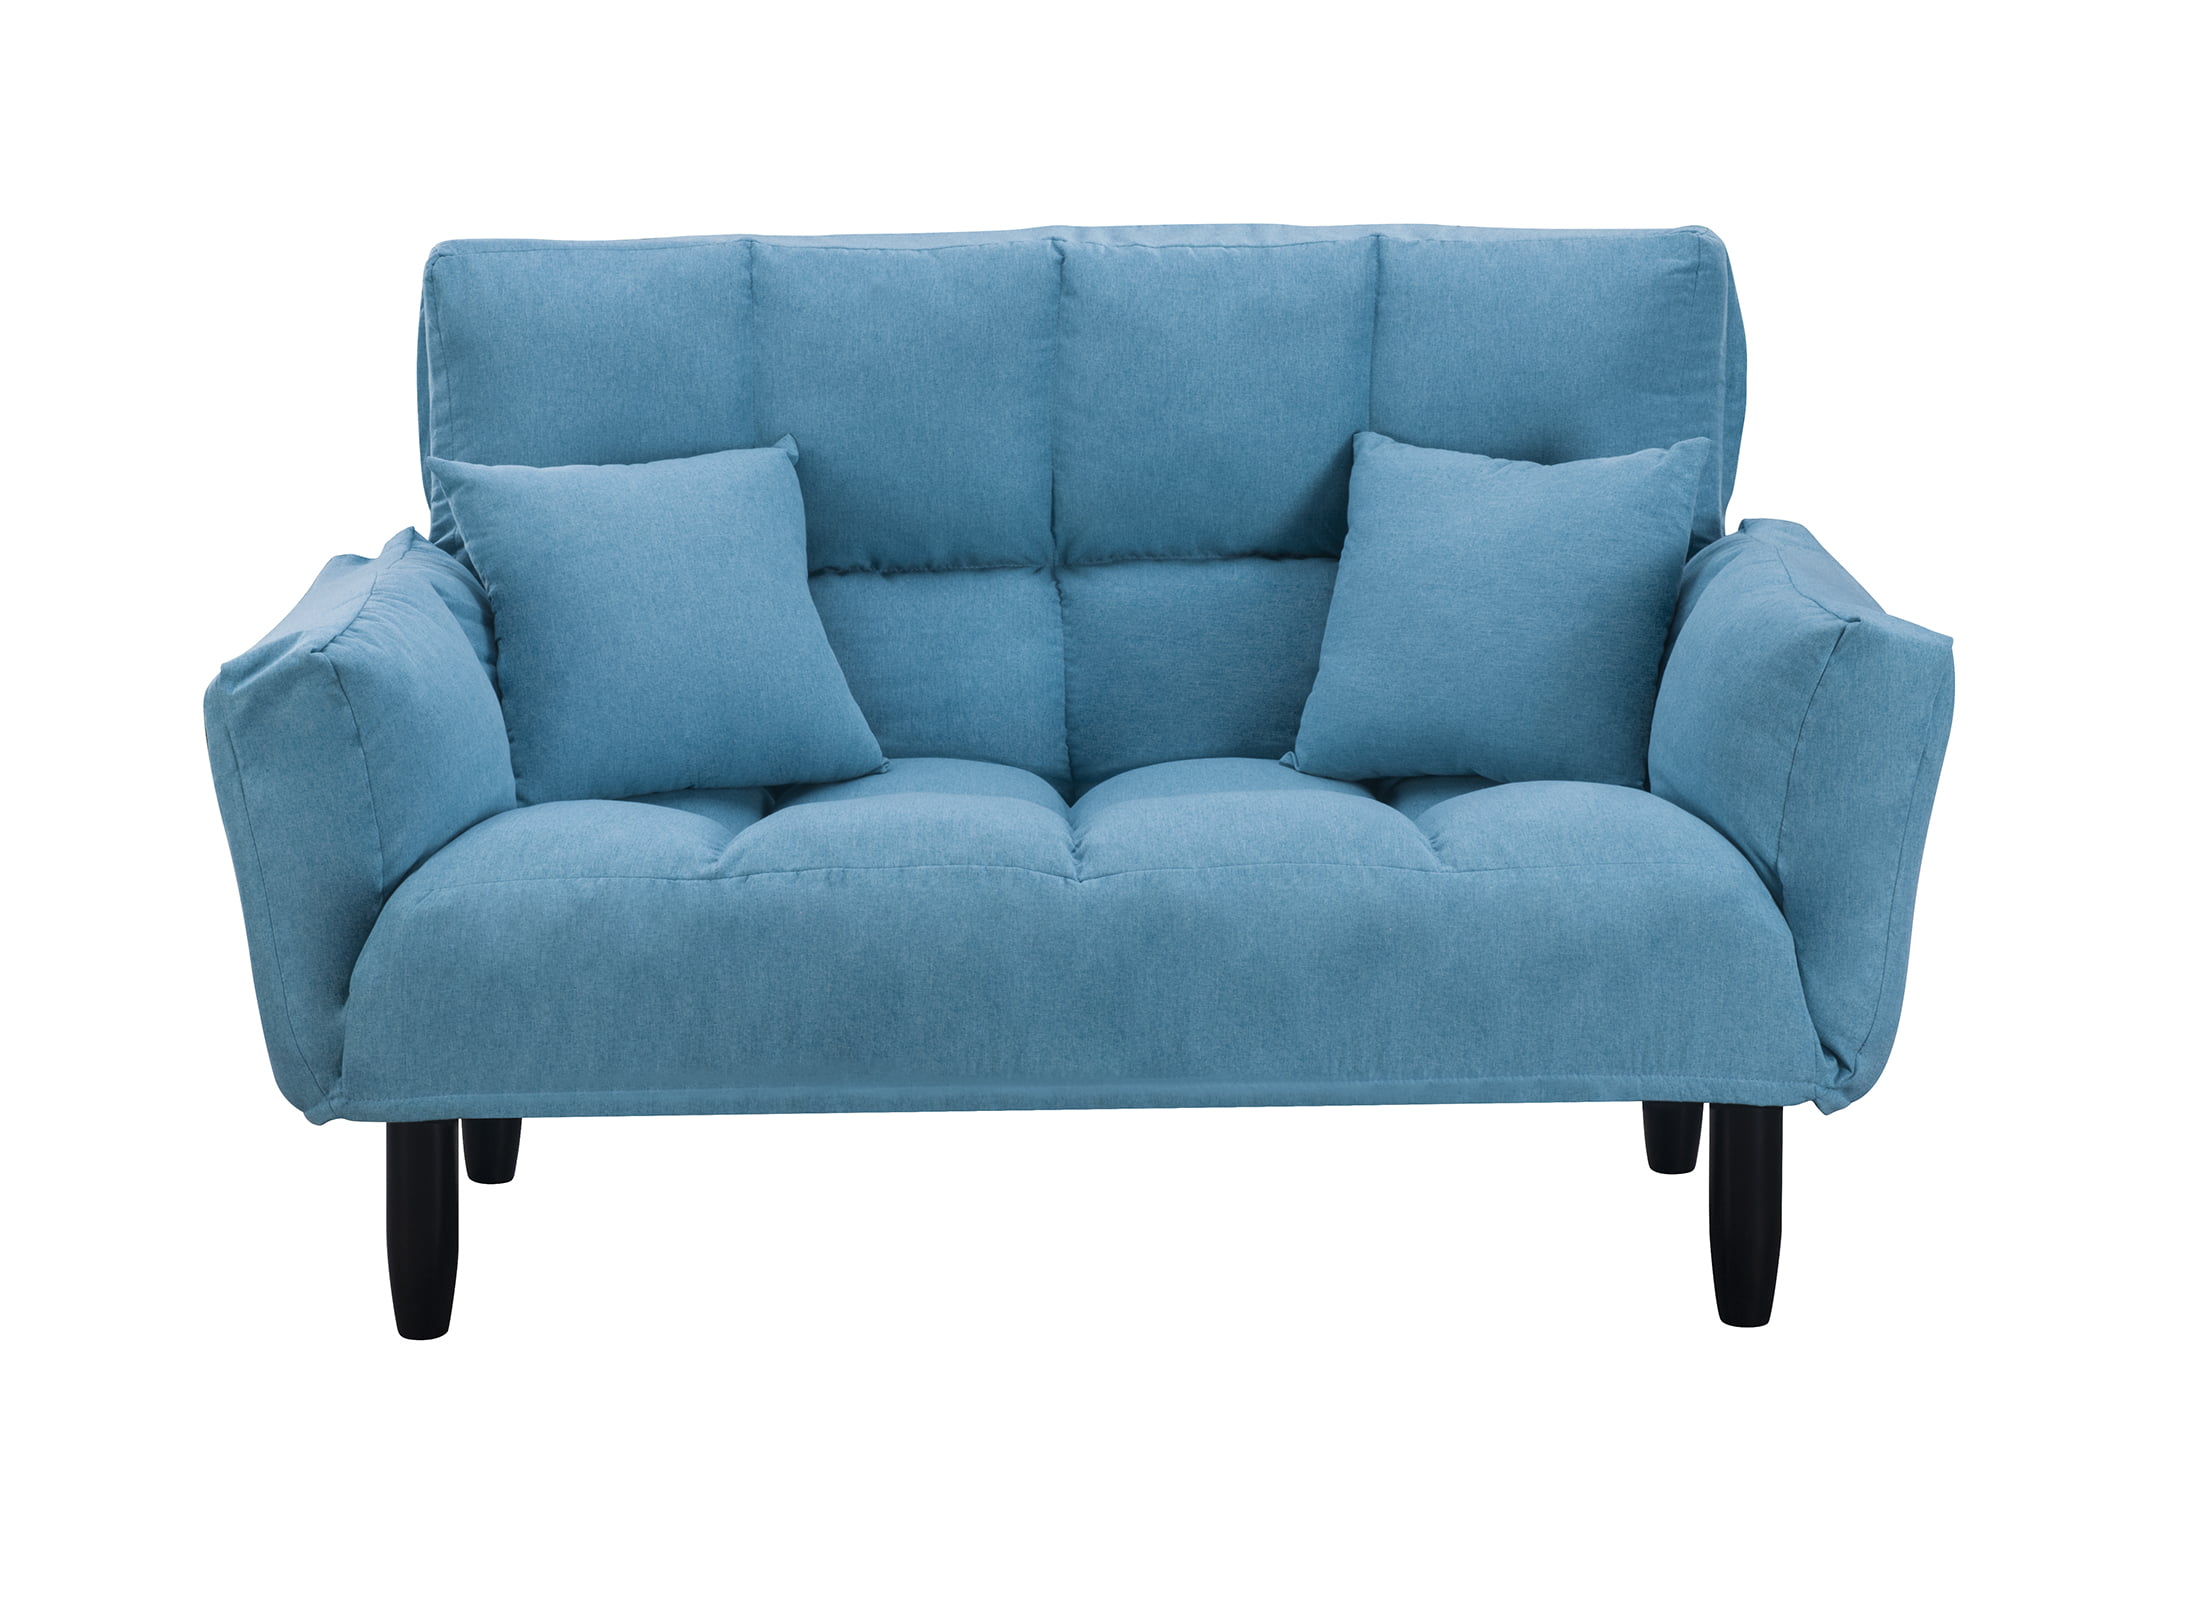 Details about   Convertible Recliner Sofa Bed Adjustable Backrest Removable Armrests 2 Pillows 